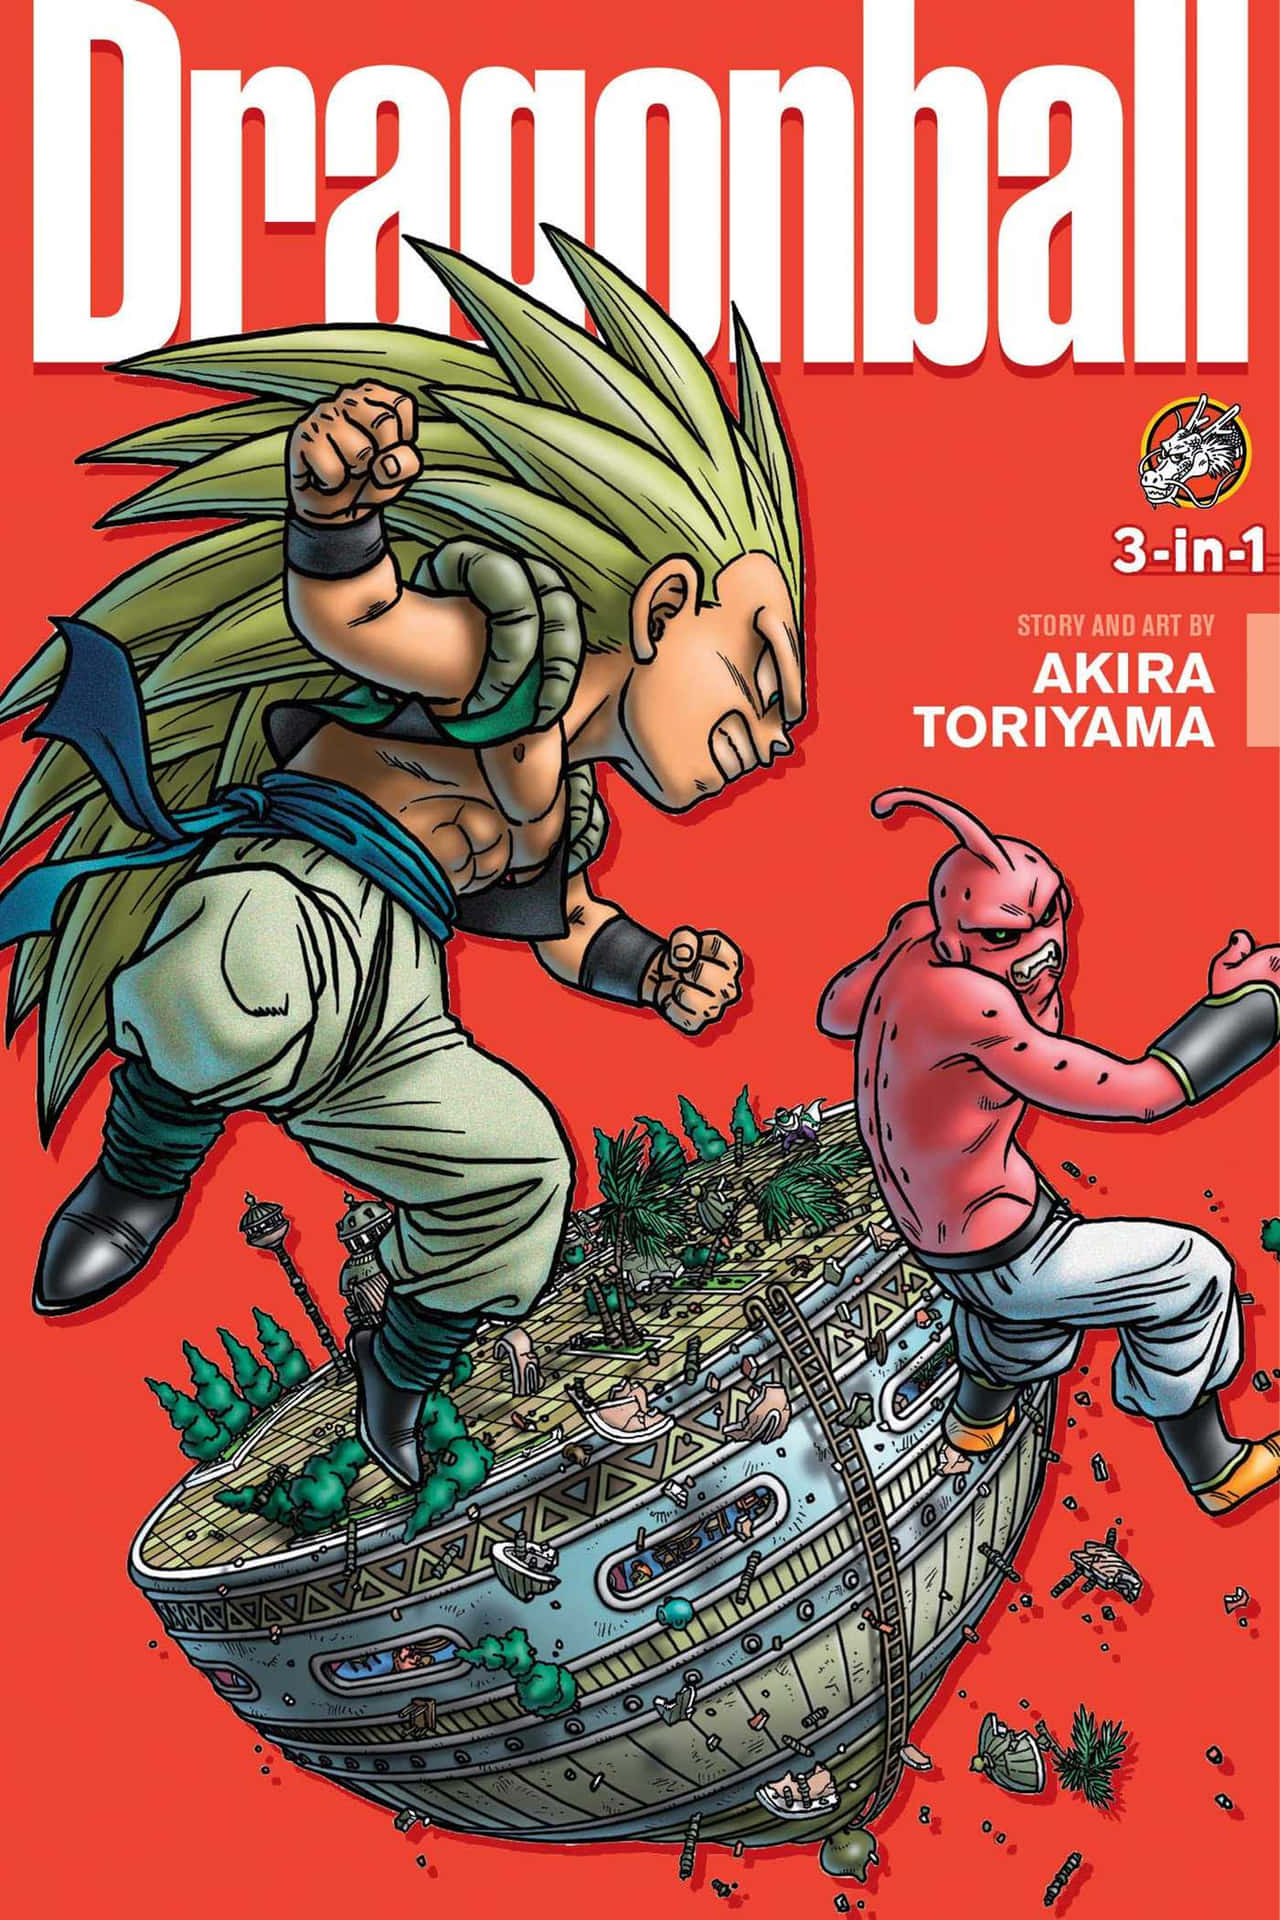 Vegeta Powers Up in The Epic Manga Series ‘Dragon Ball Super’ Wallpaper